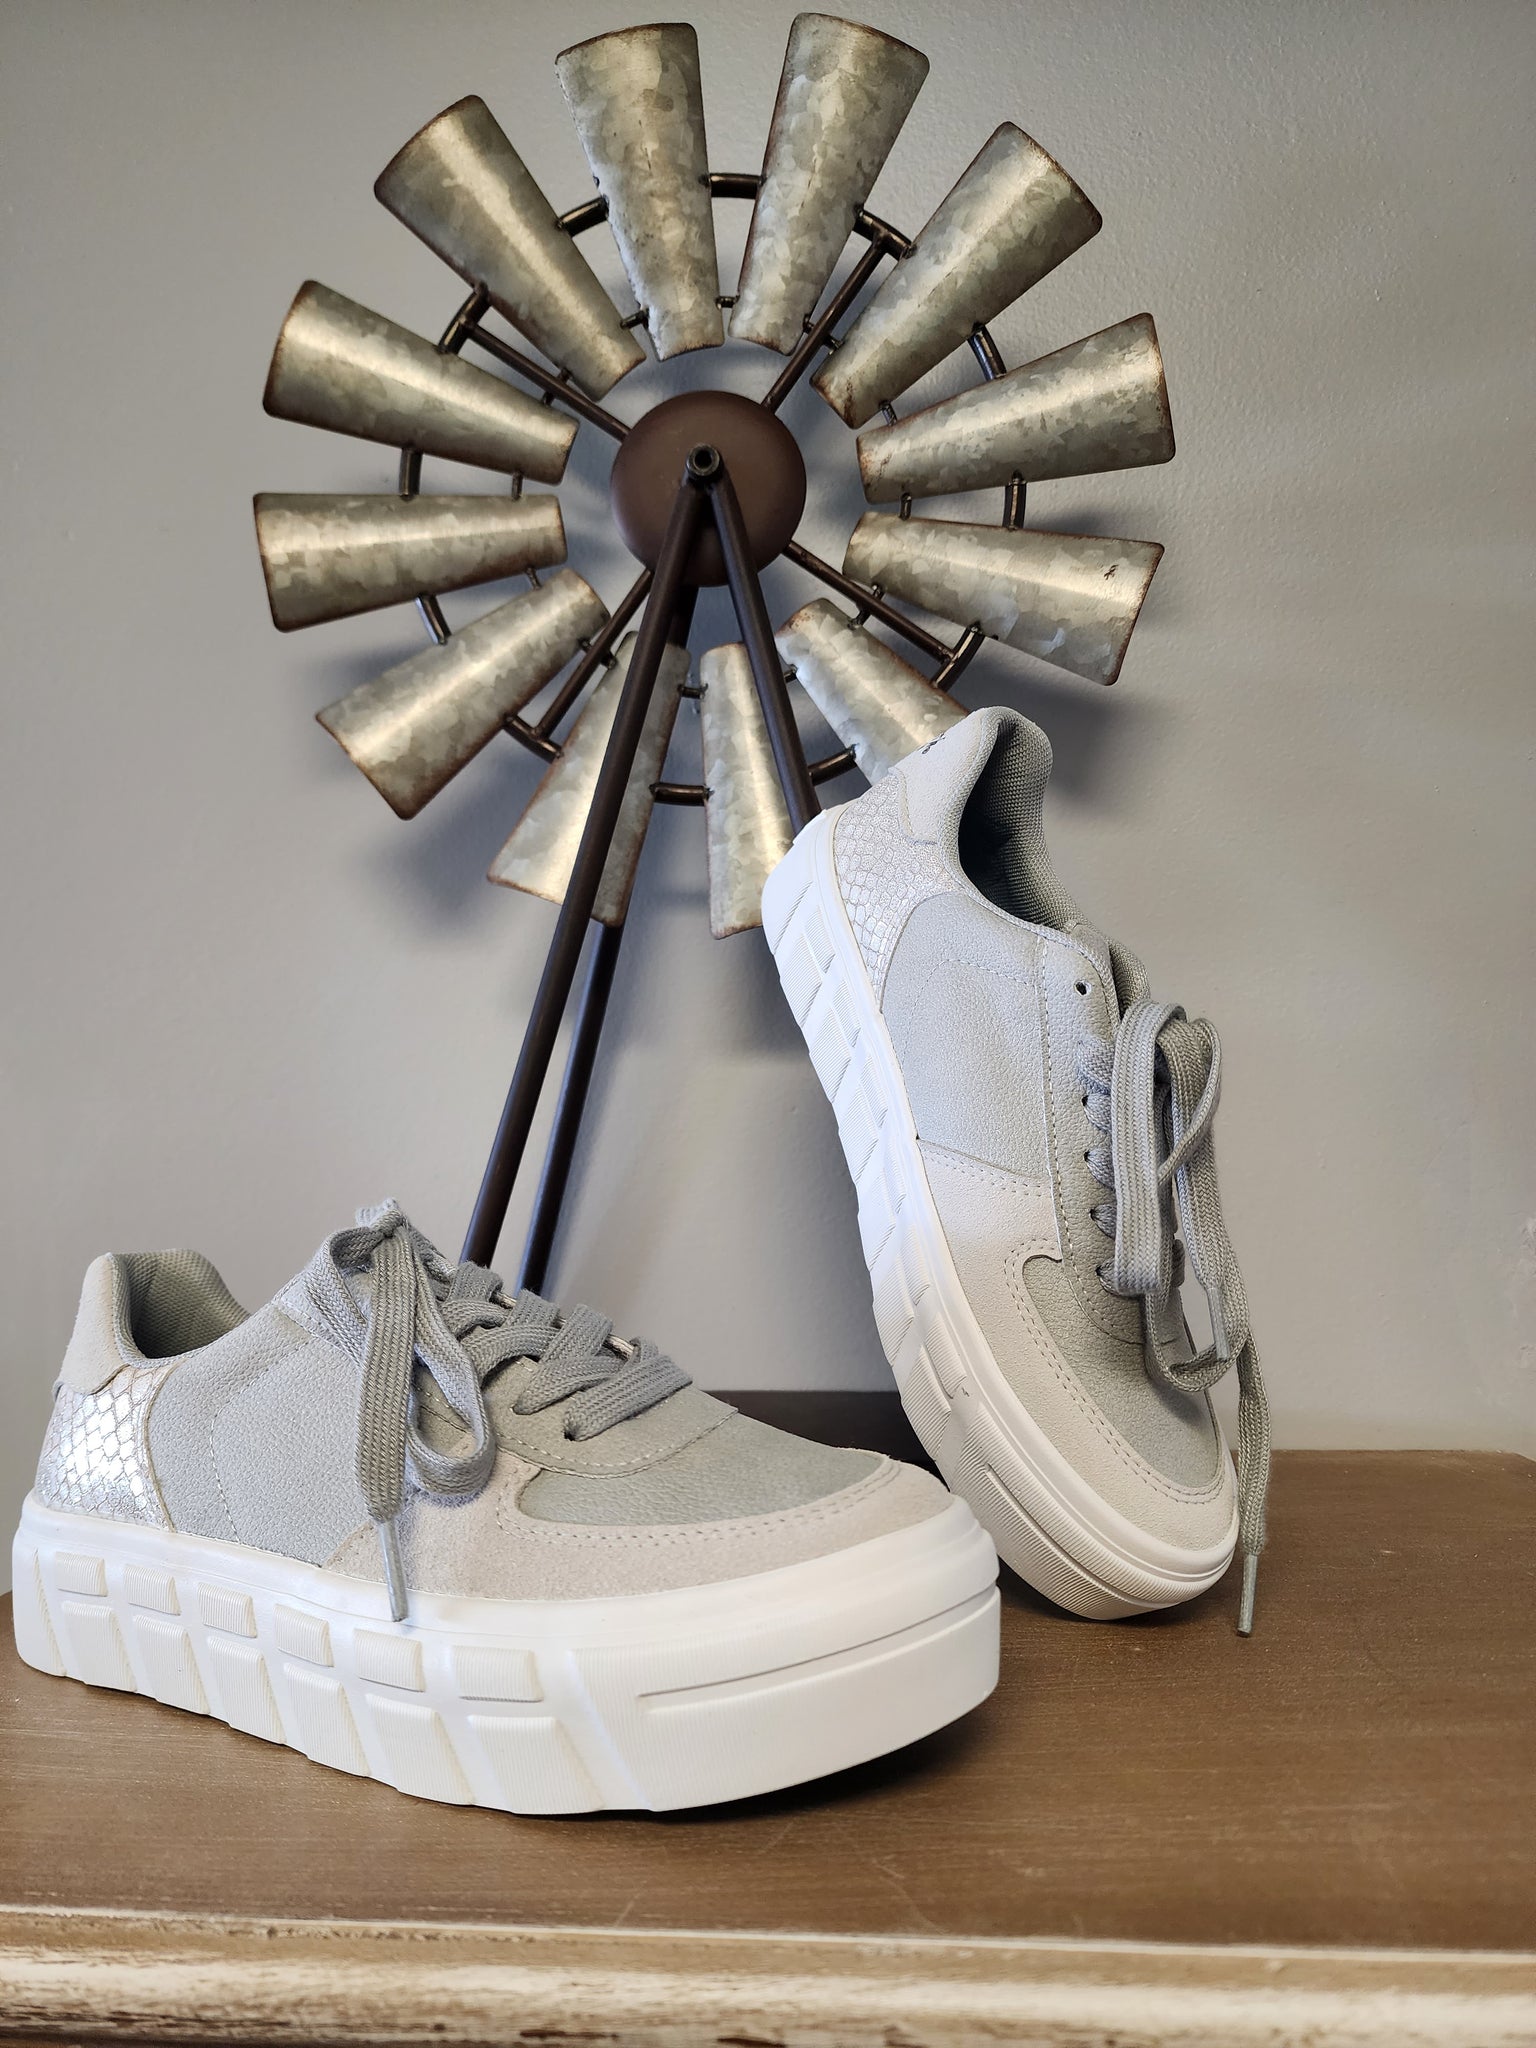 Sideout vapor grey shoe